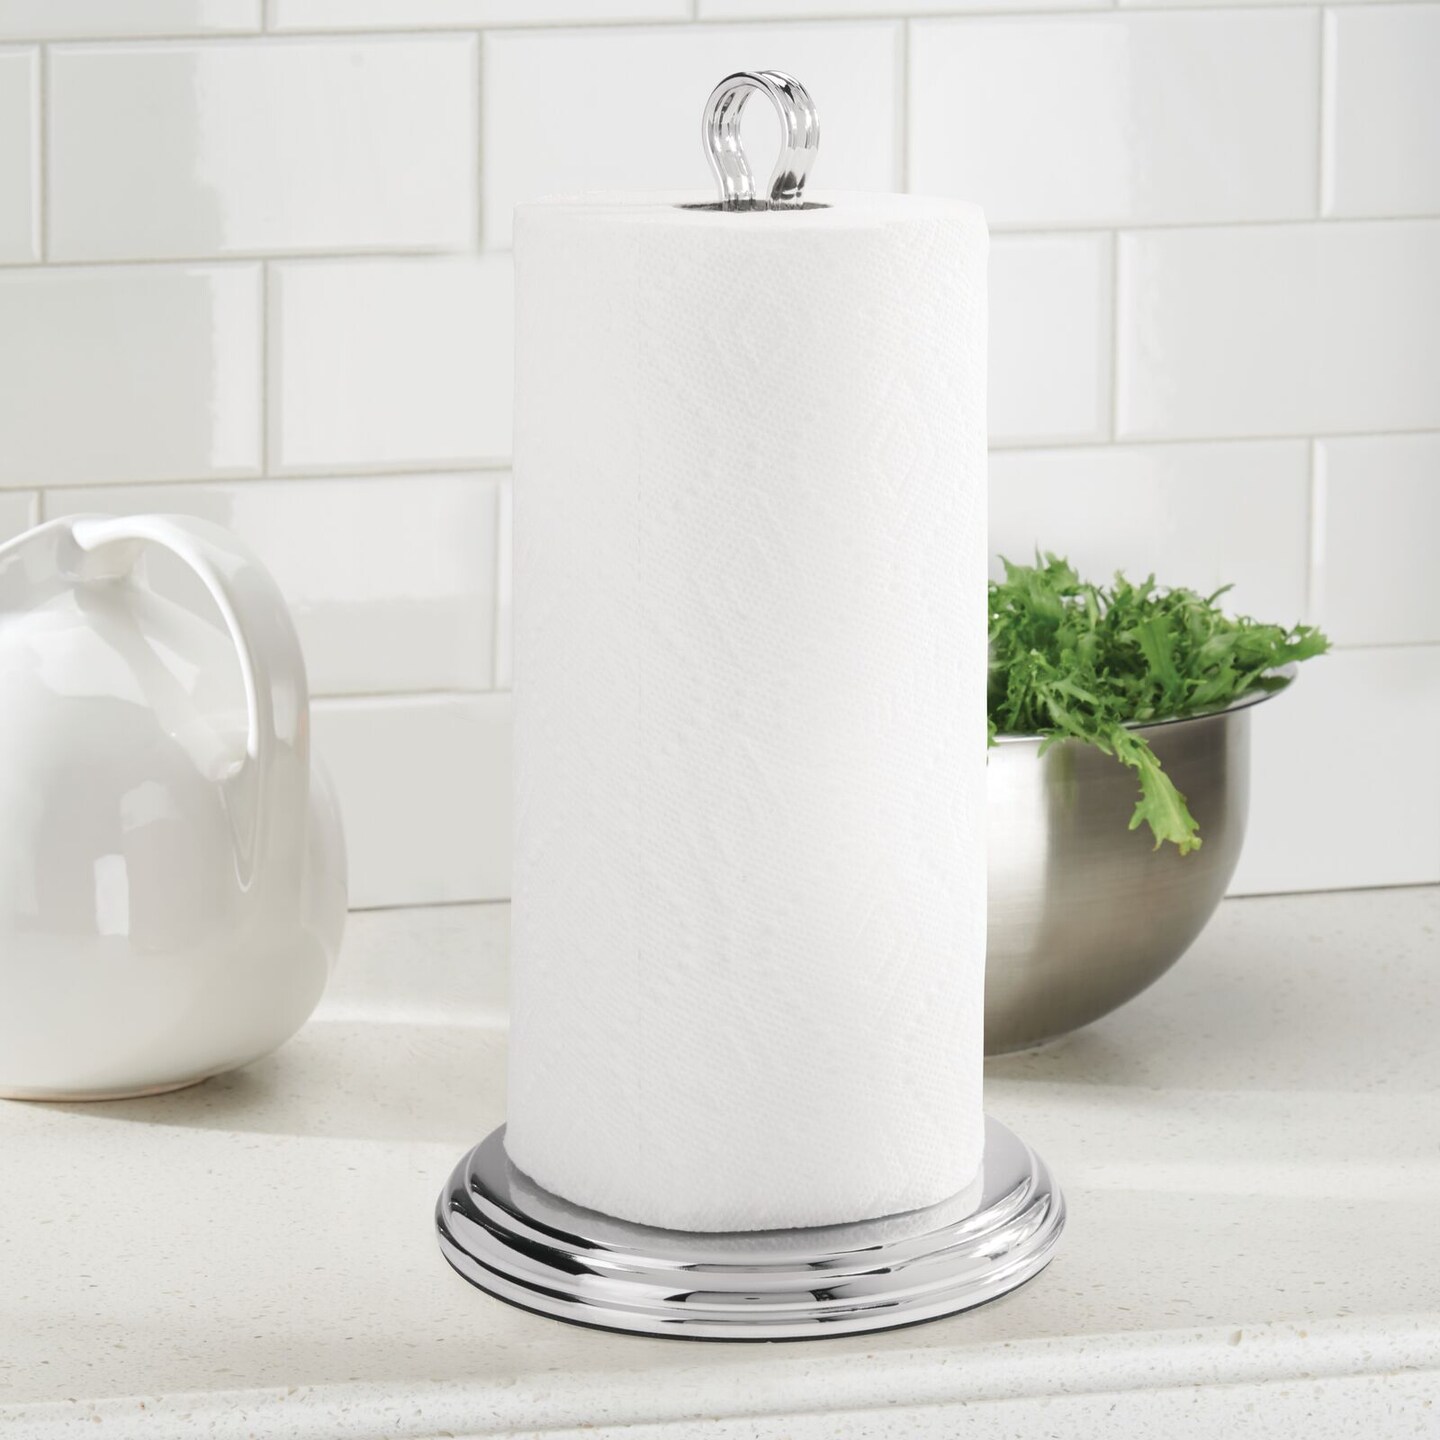 mDesign Countertop Paper Towel Holder